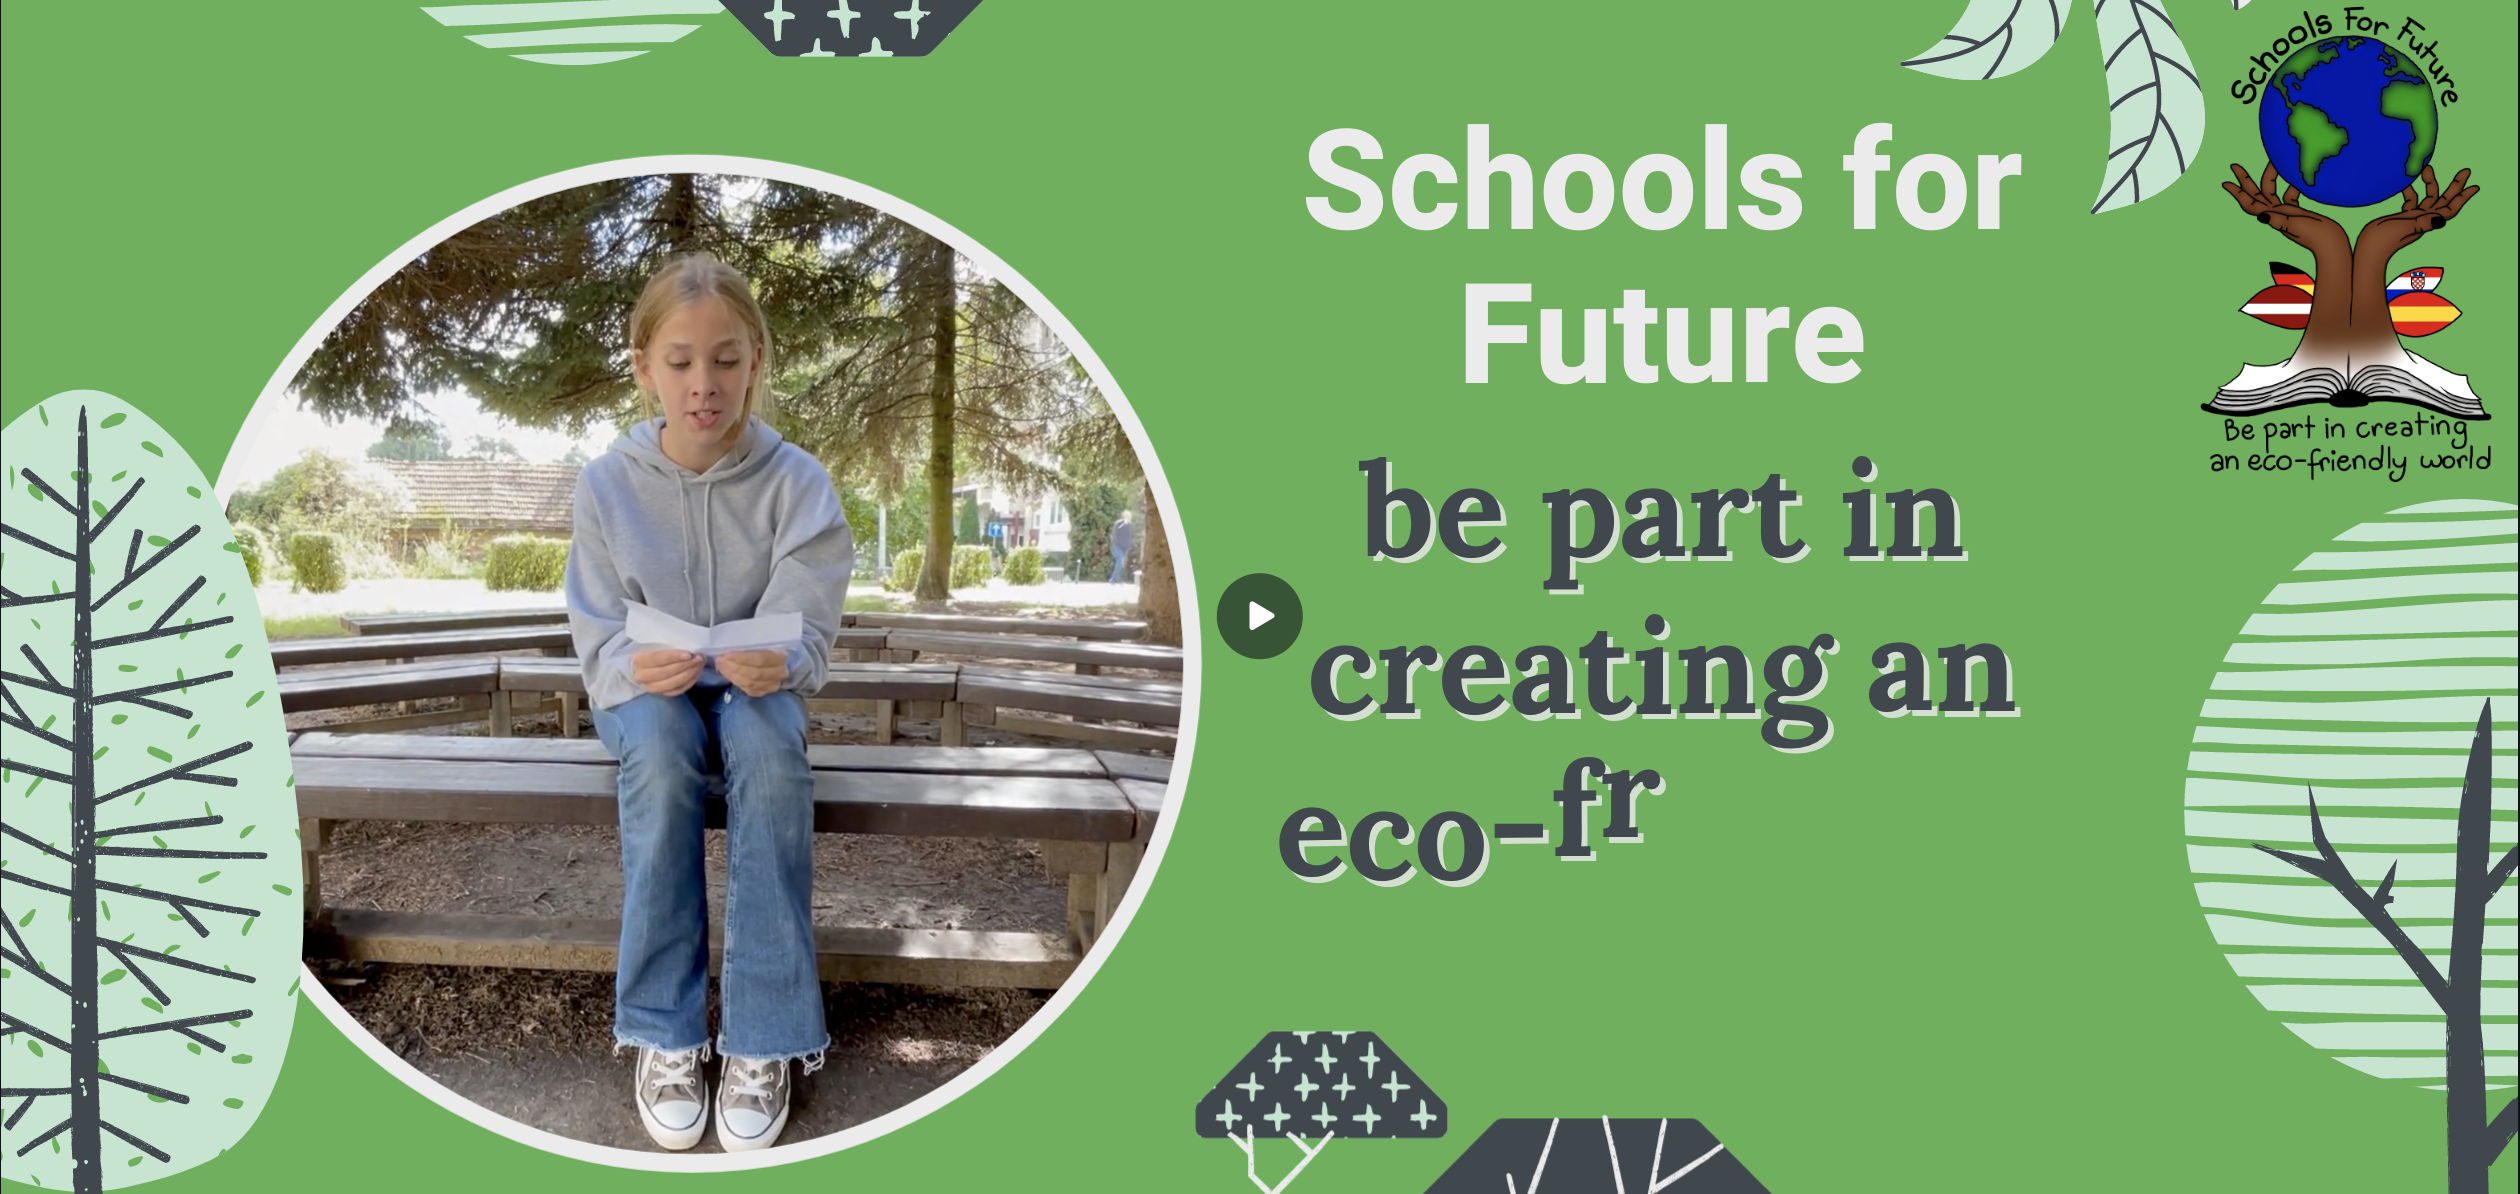 VIDEO FINAL PROYECTO ERASMUS + SCHOOLS FOR FUTURE